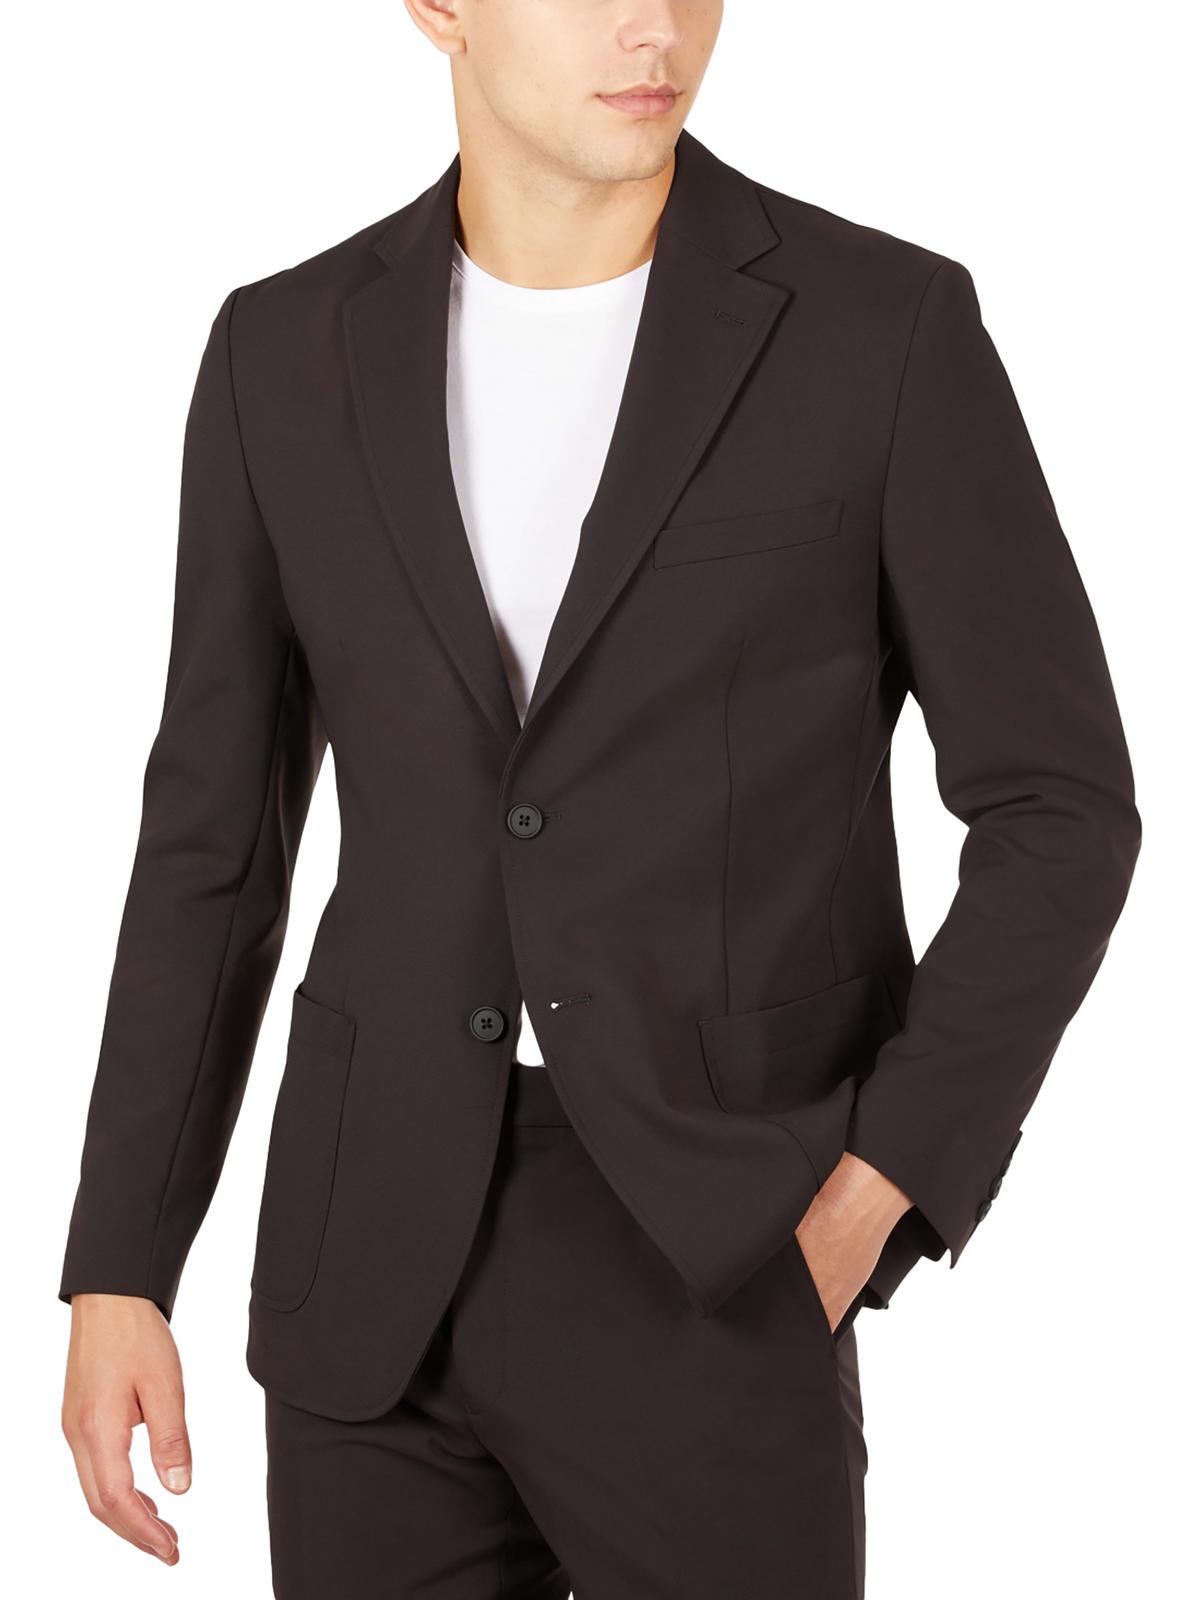 Michael Kors Kuffs Men's Modern Fit Business Suit Jacket